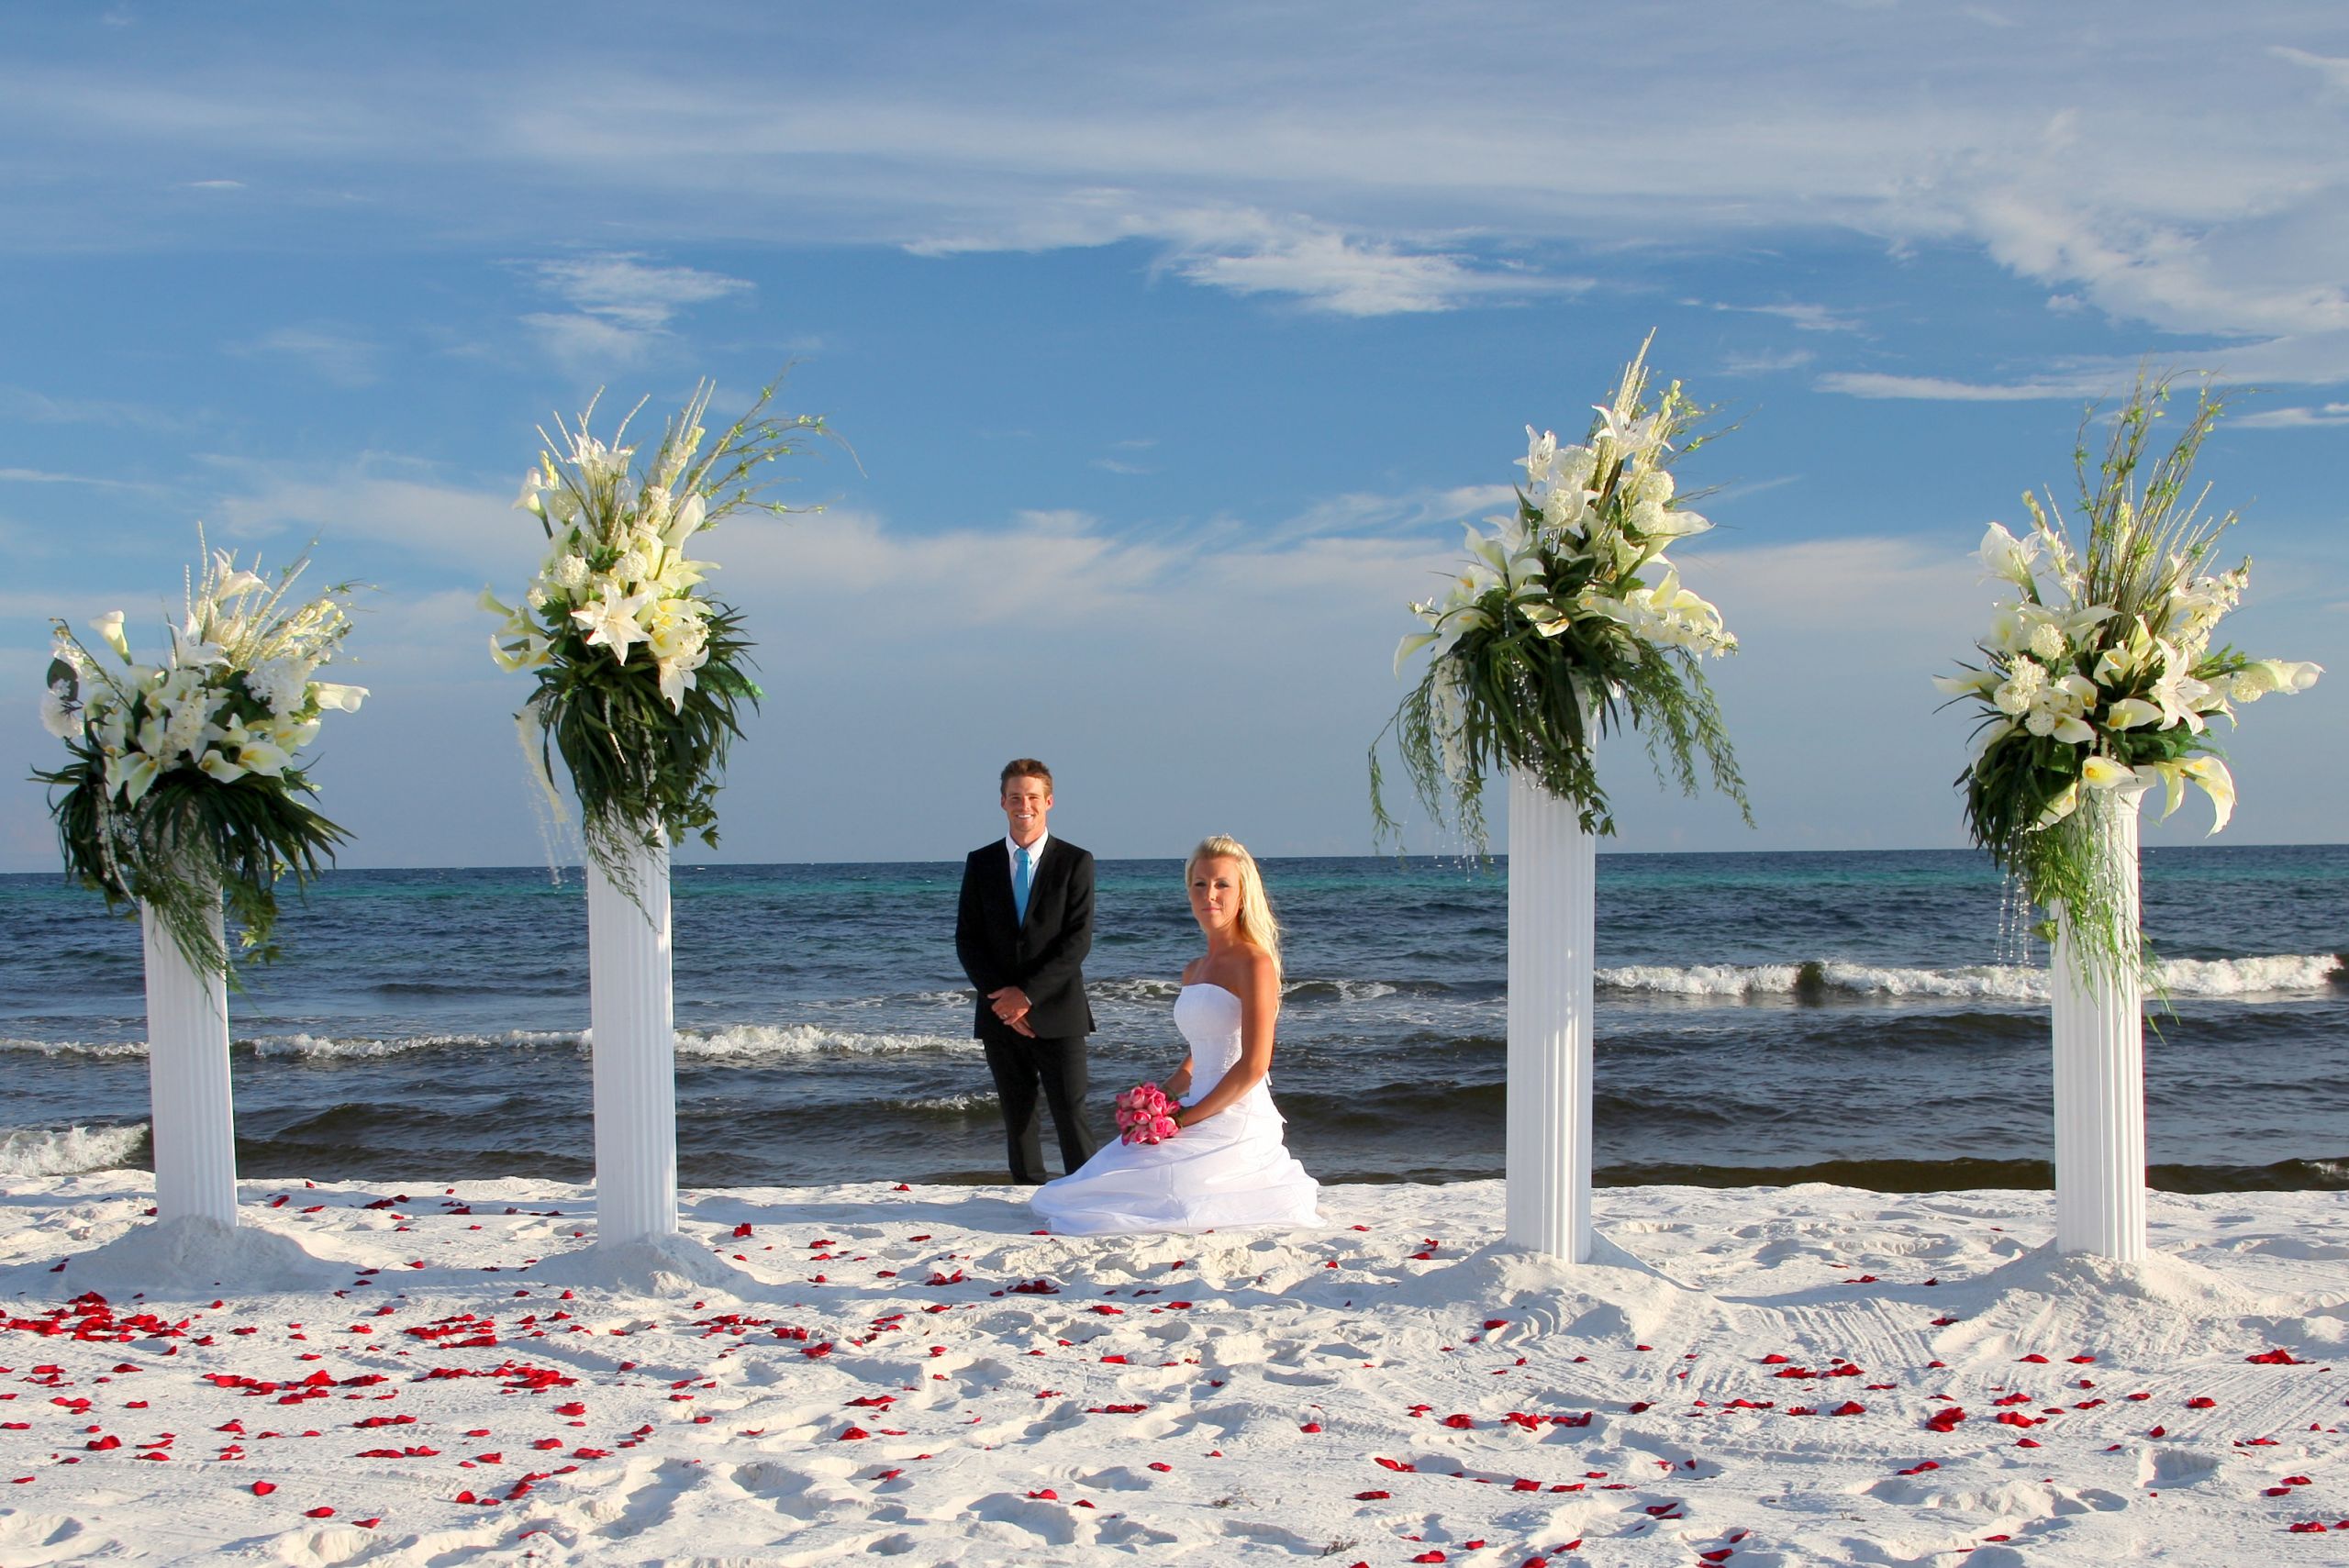 Beach Weddings Destin Fl
 Destin Beach Wedding Packages Destin Weddings Beach